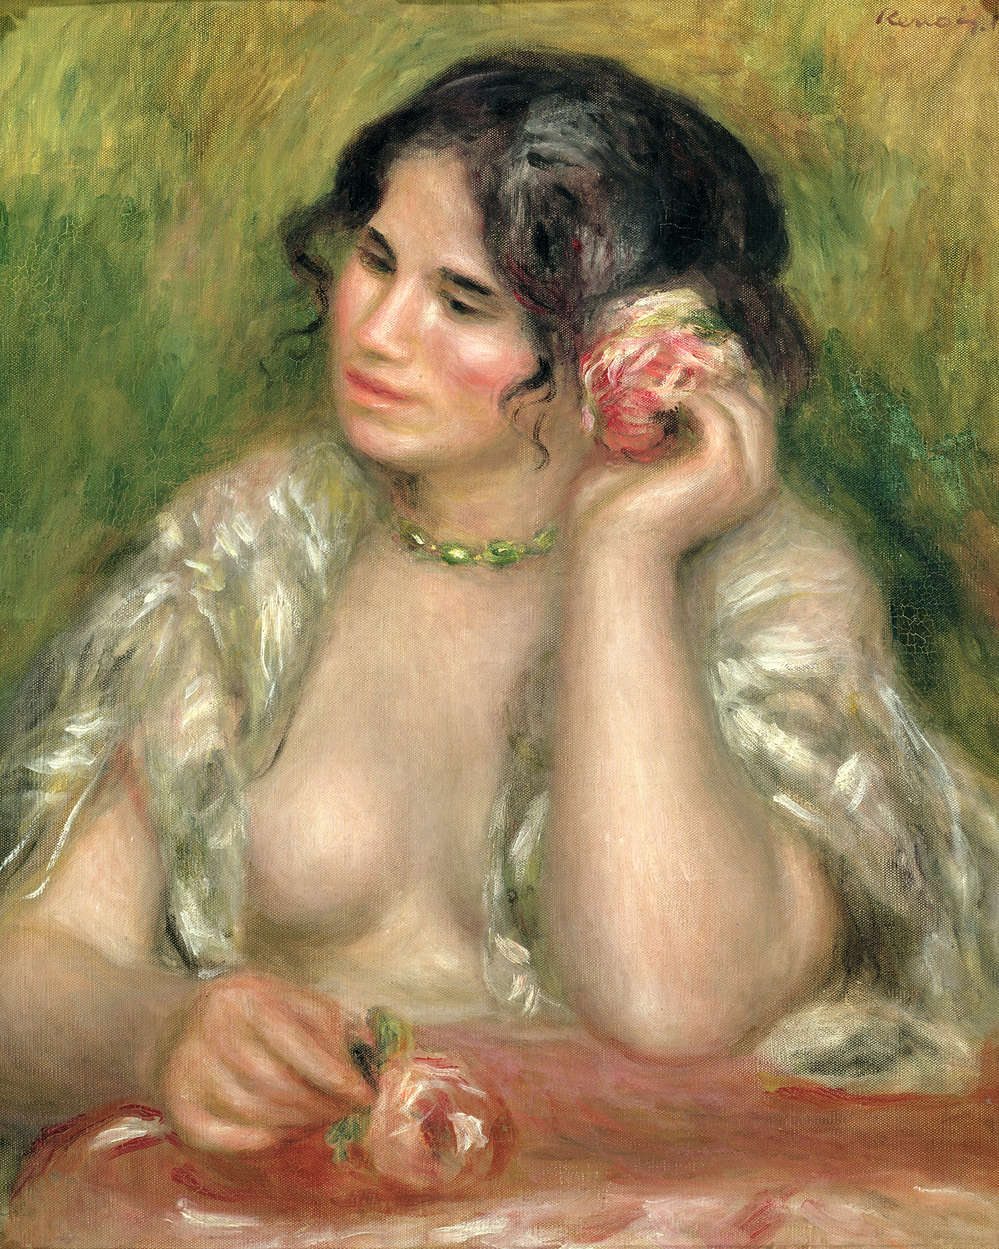             Fotomurali "Gabrielle con rosa" di Pierre Auguste Renoir
        